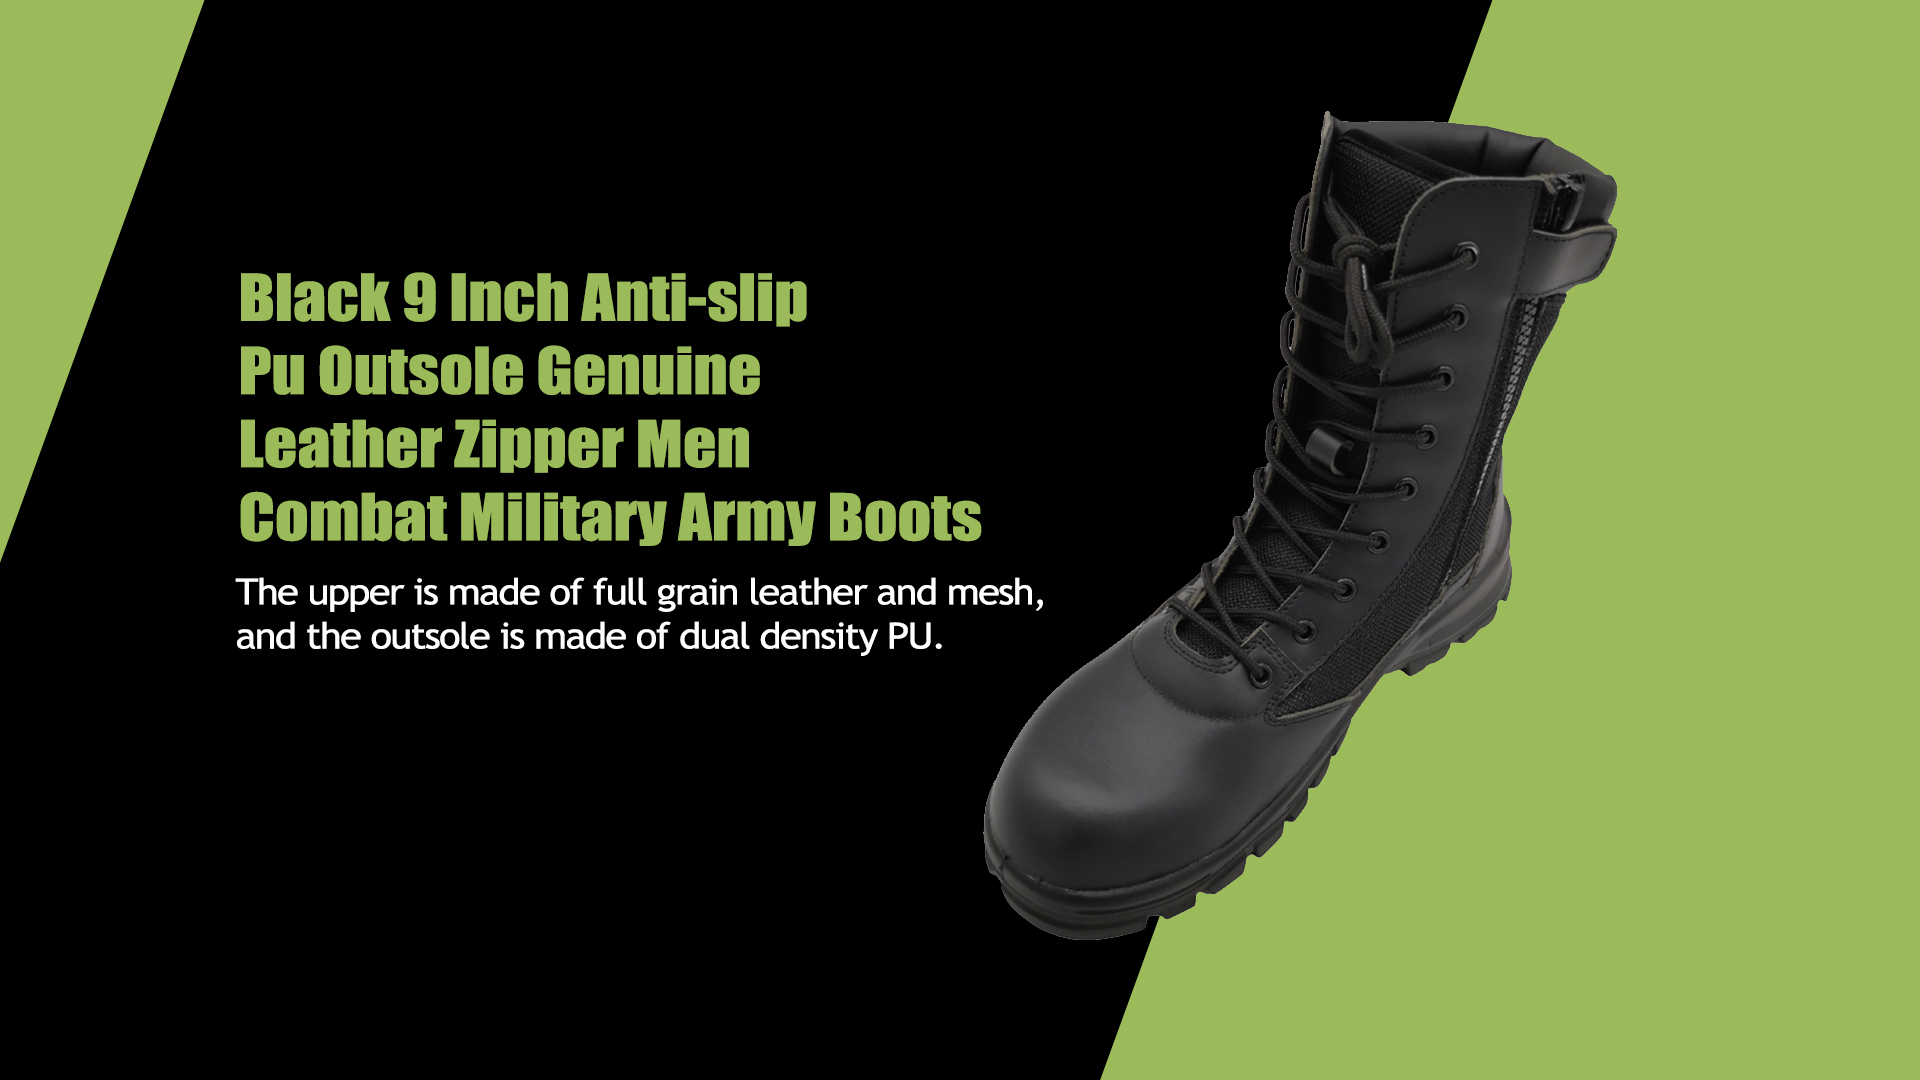 Black 9 Inch Anti-slip Pu Outsole Genuine Leather Zipper Men Combat Military Army Boots